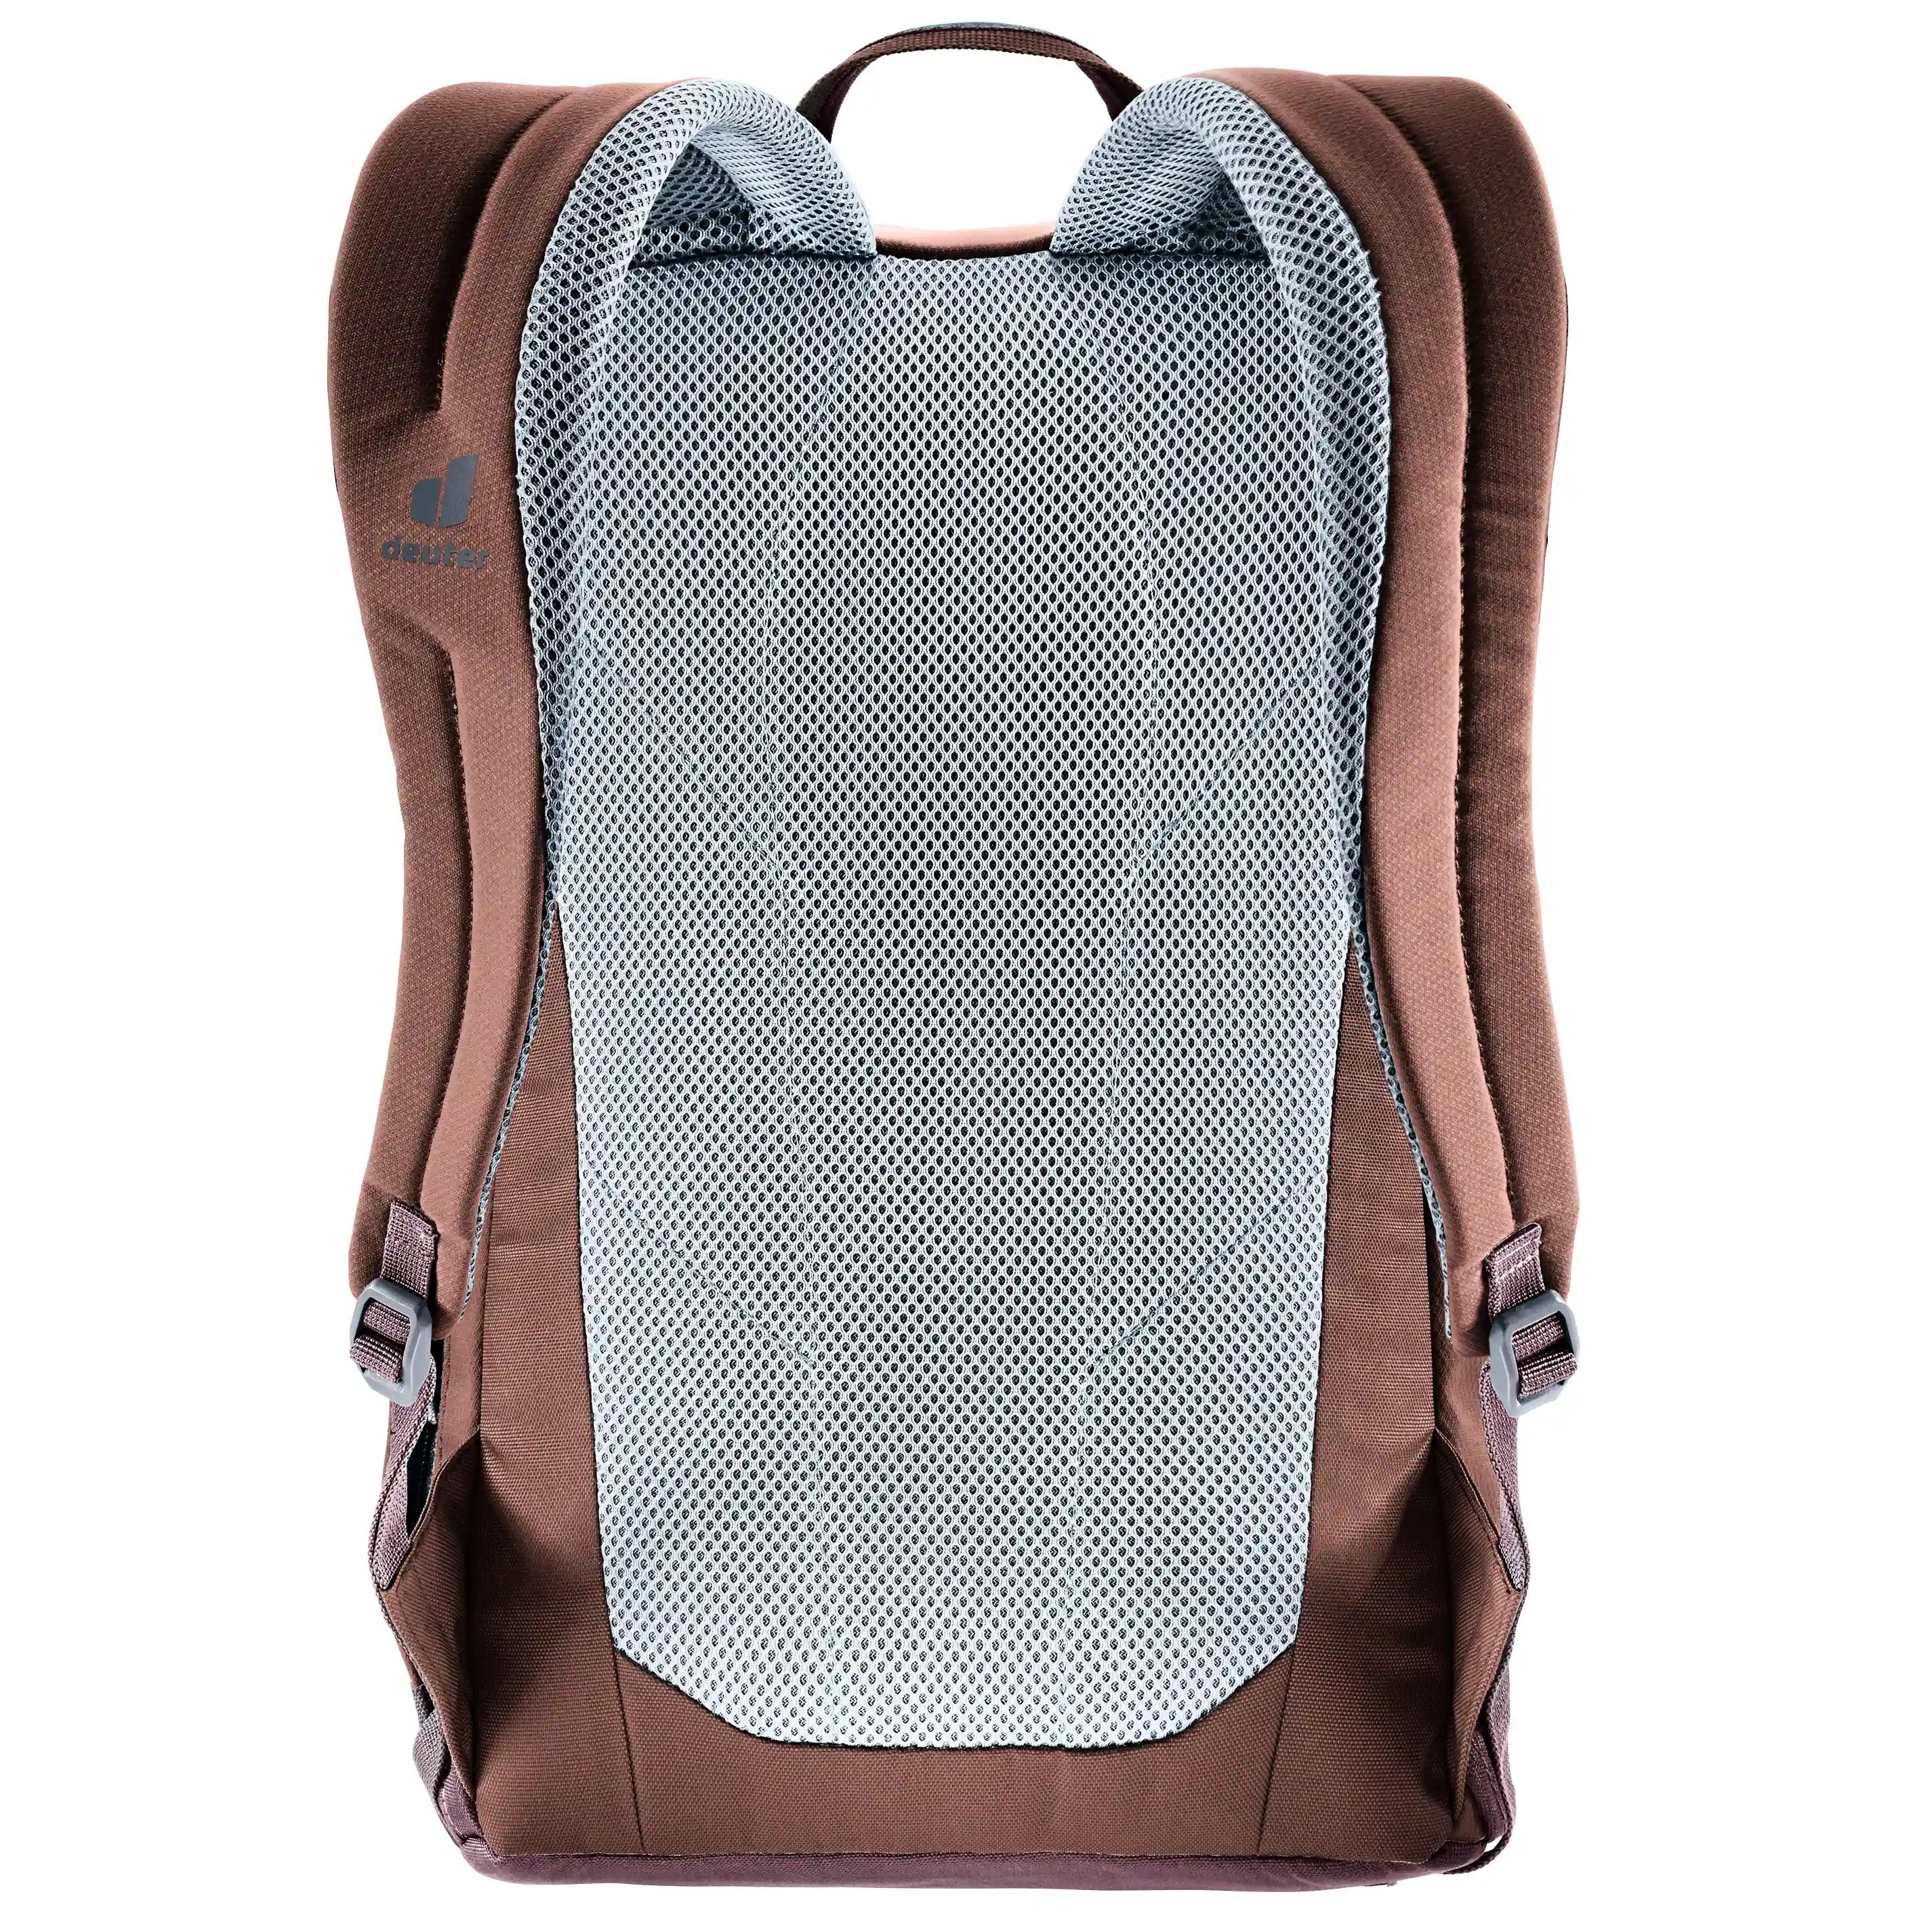 Deuter Gogo Lifestyle Backpack 46 cm - Black